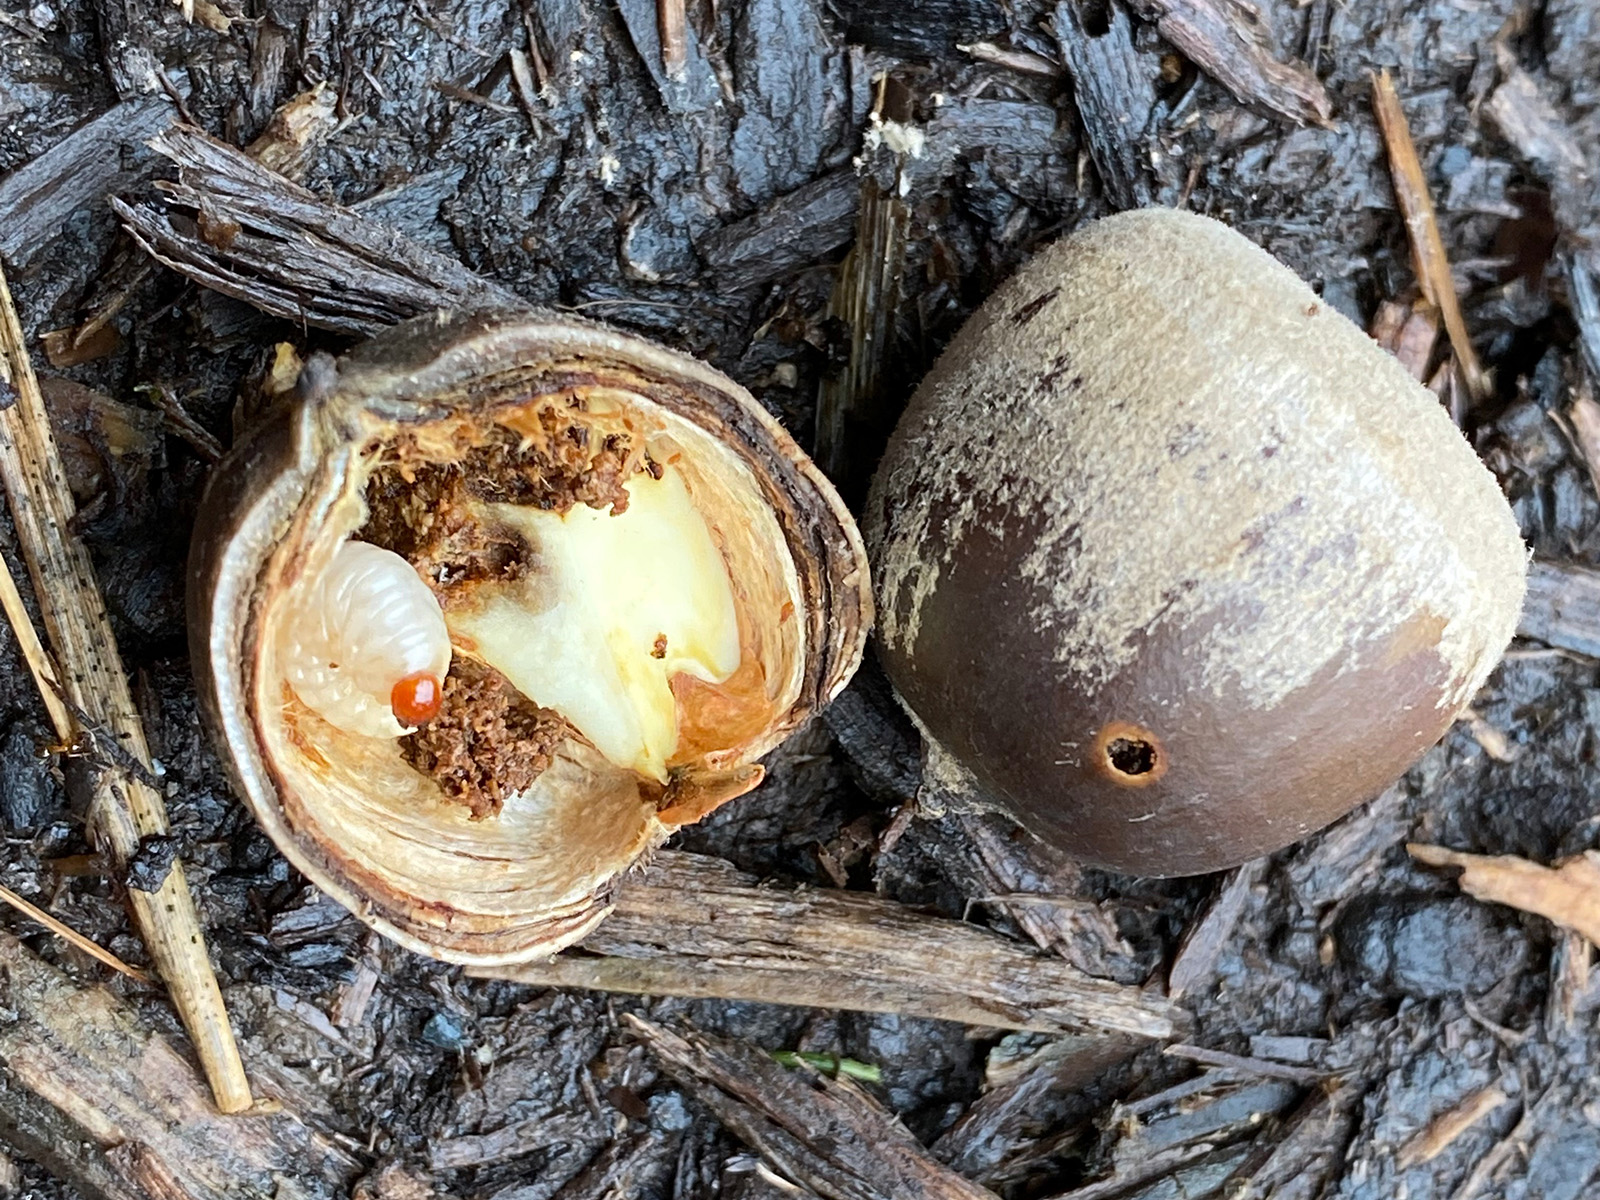 Acorn weevil beetle with acorn